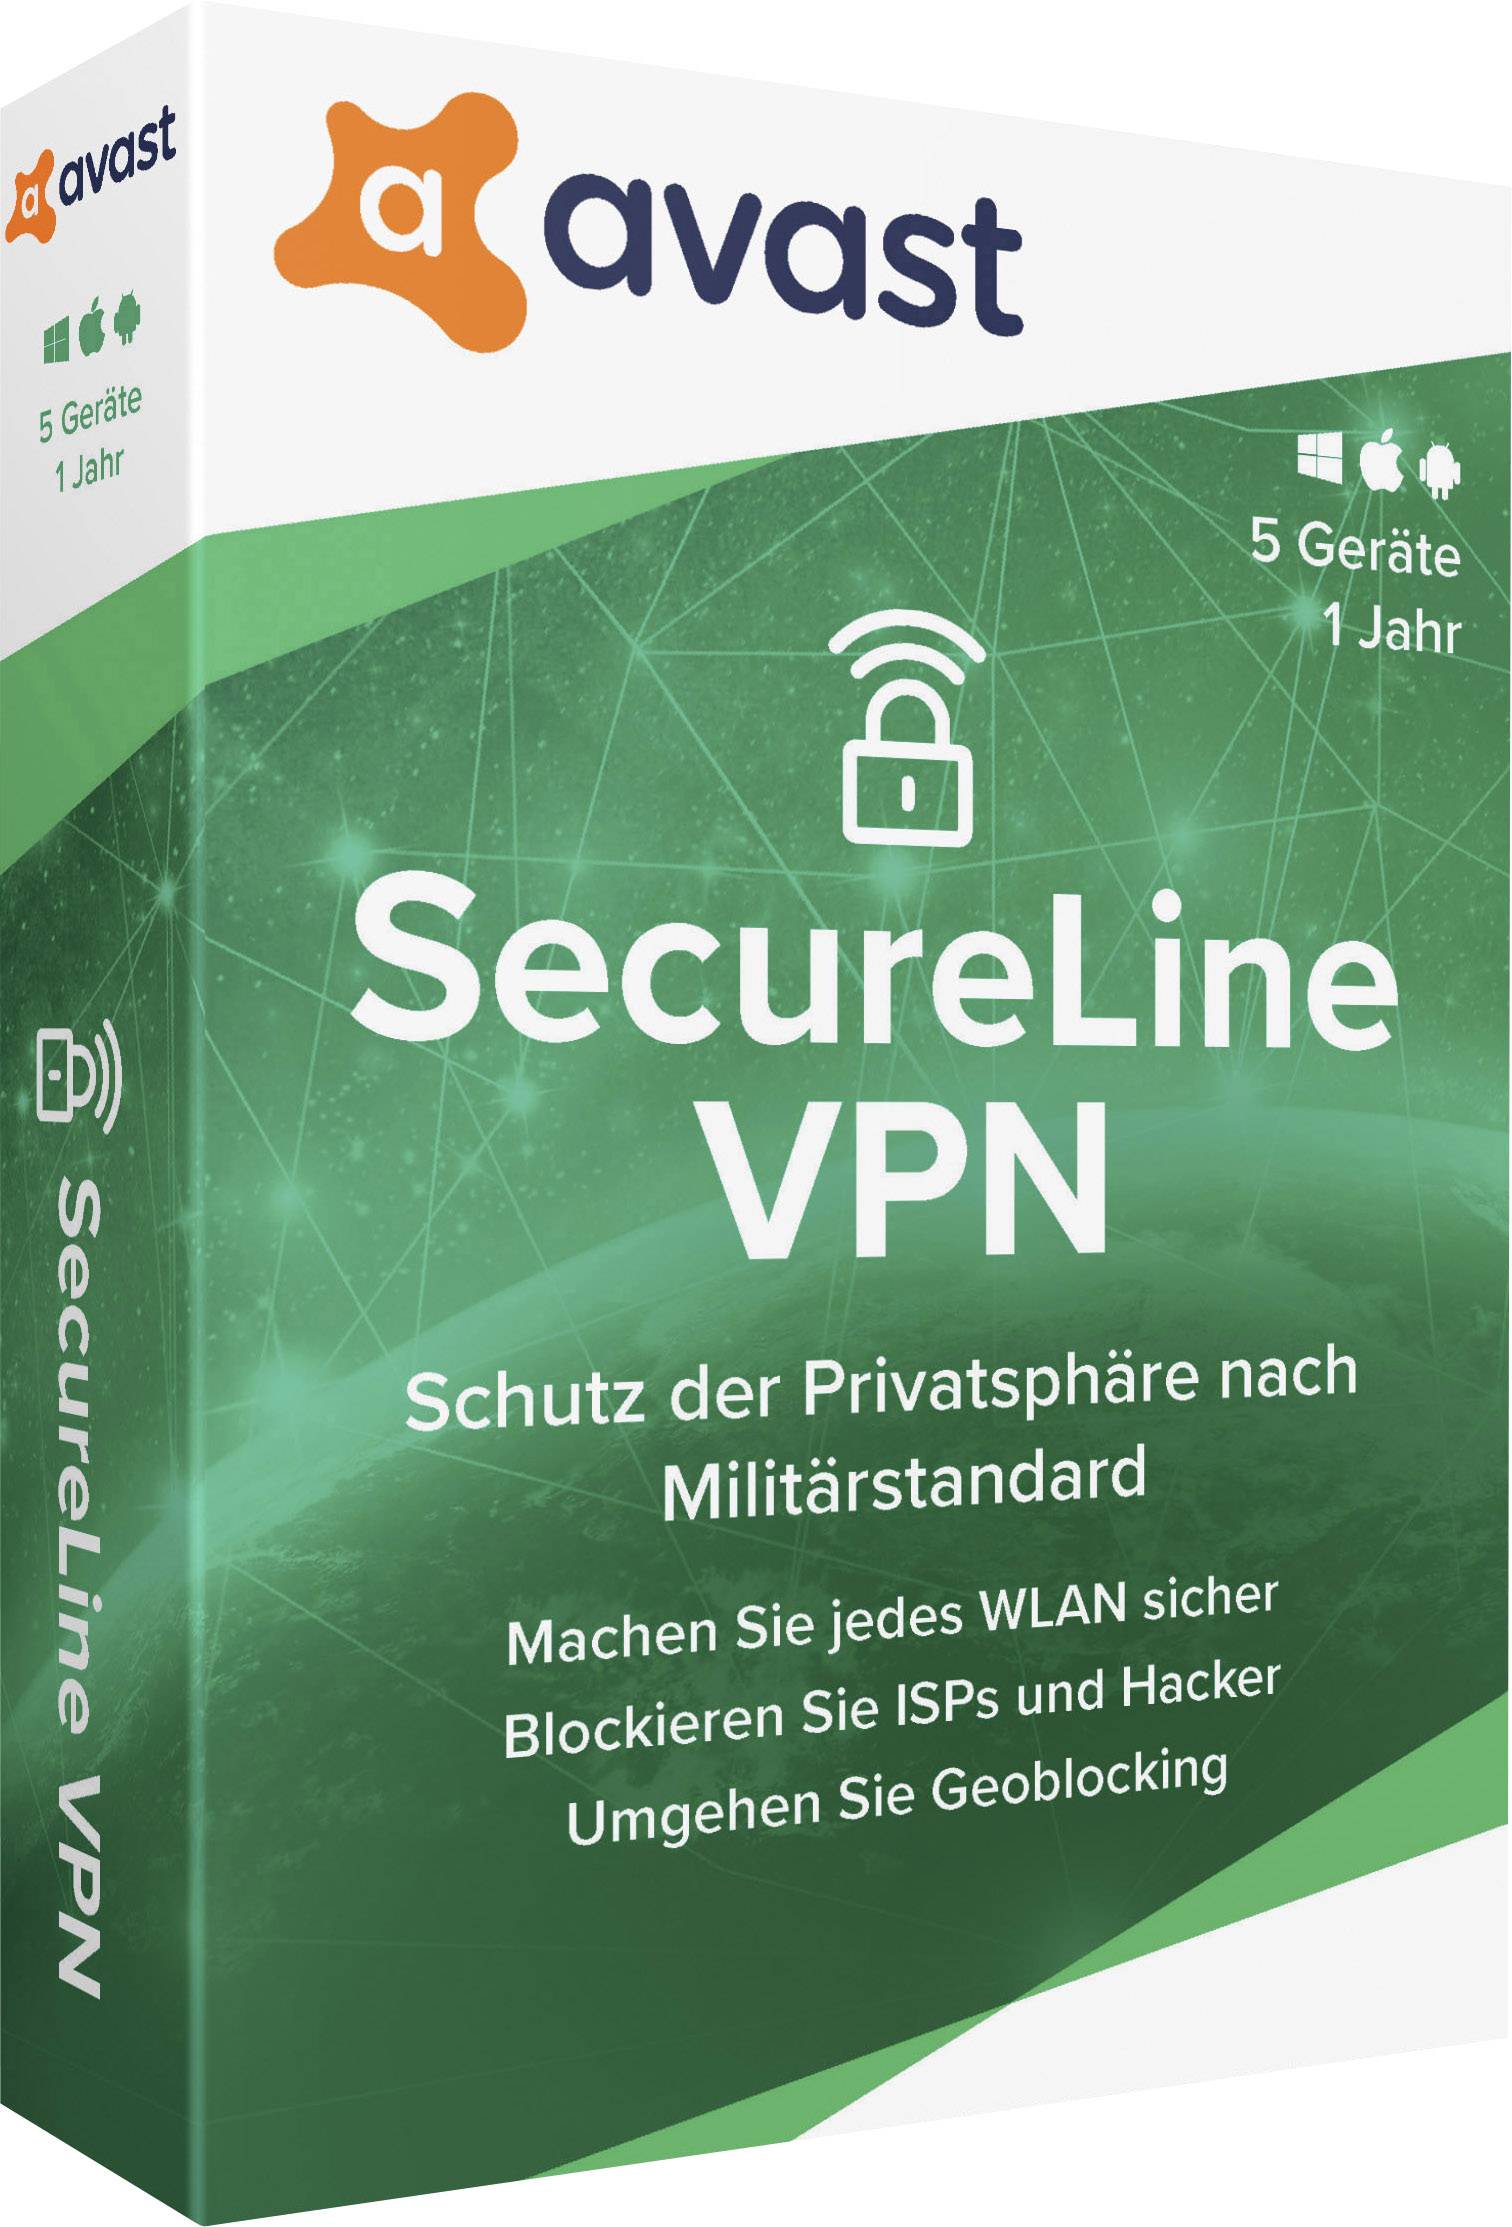 avast secureline vpn what is it